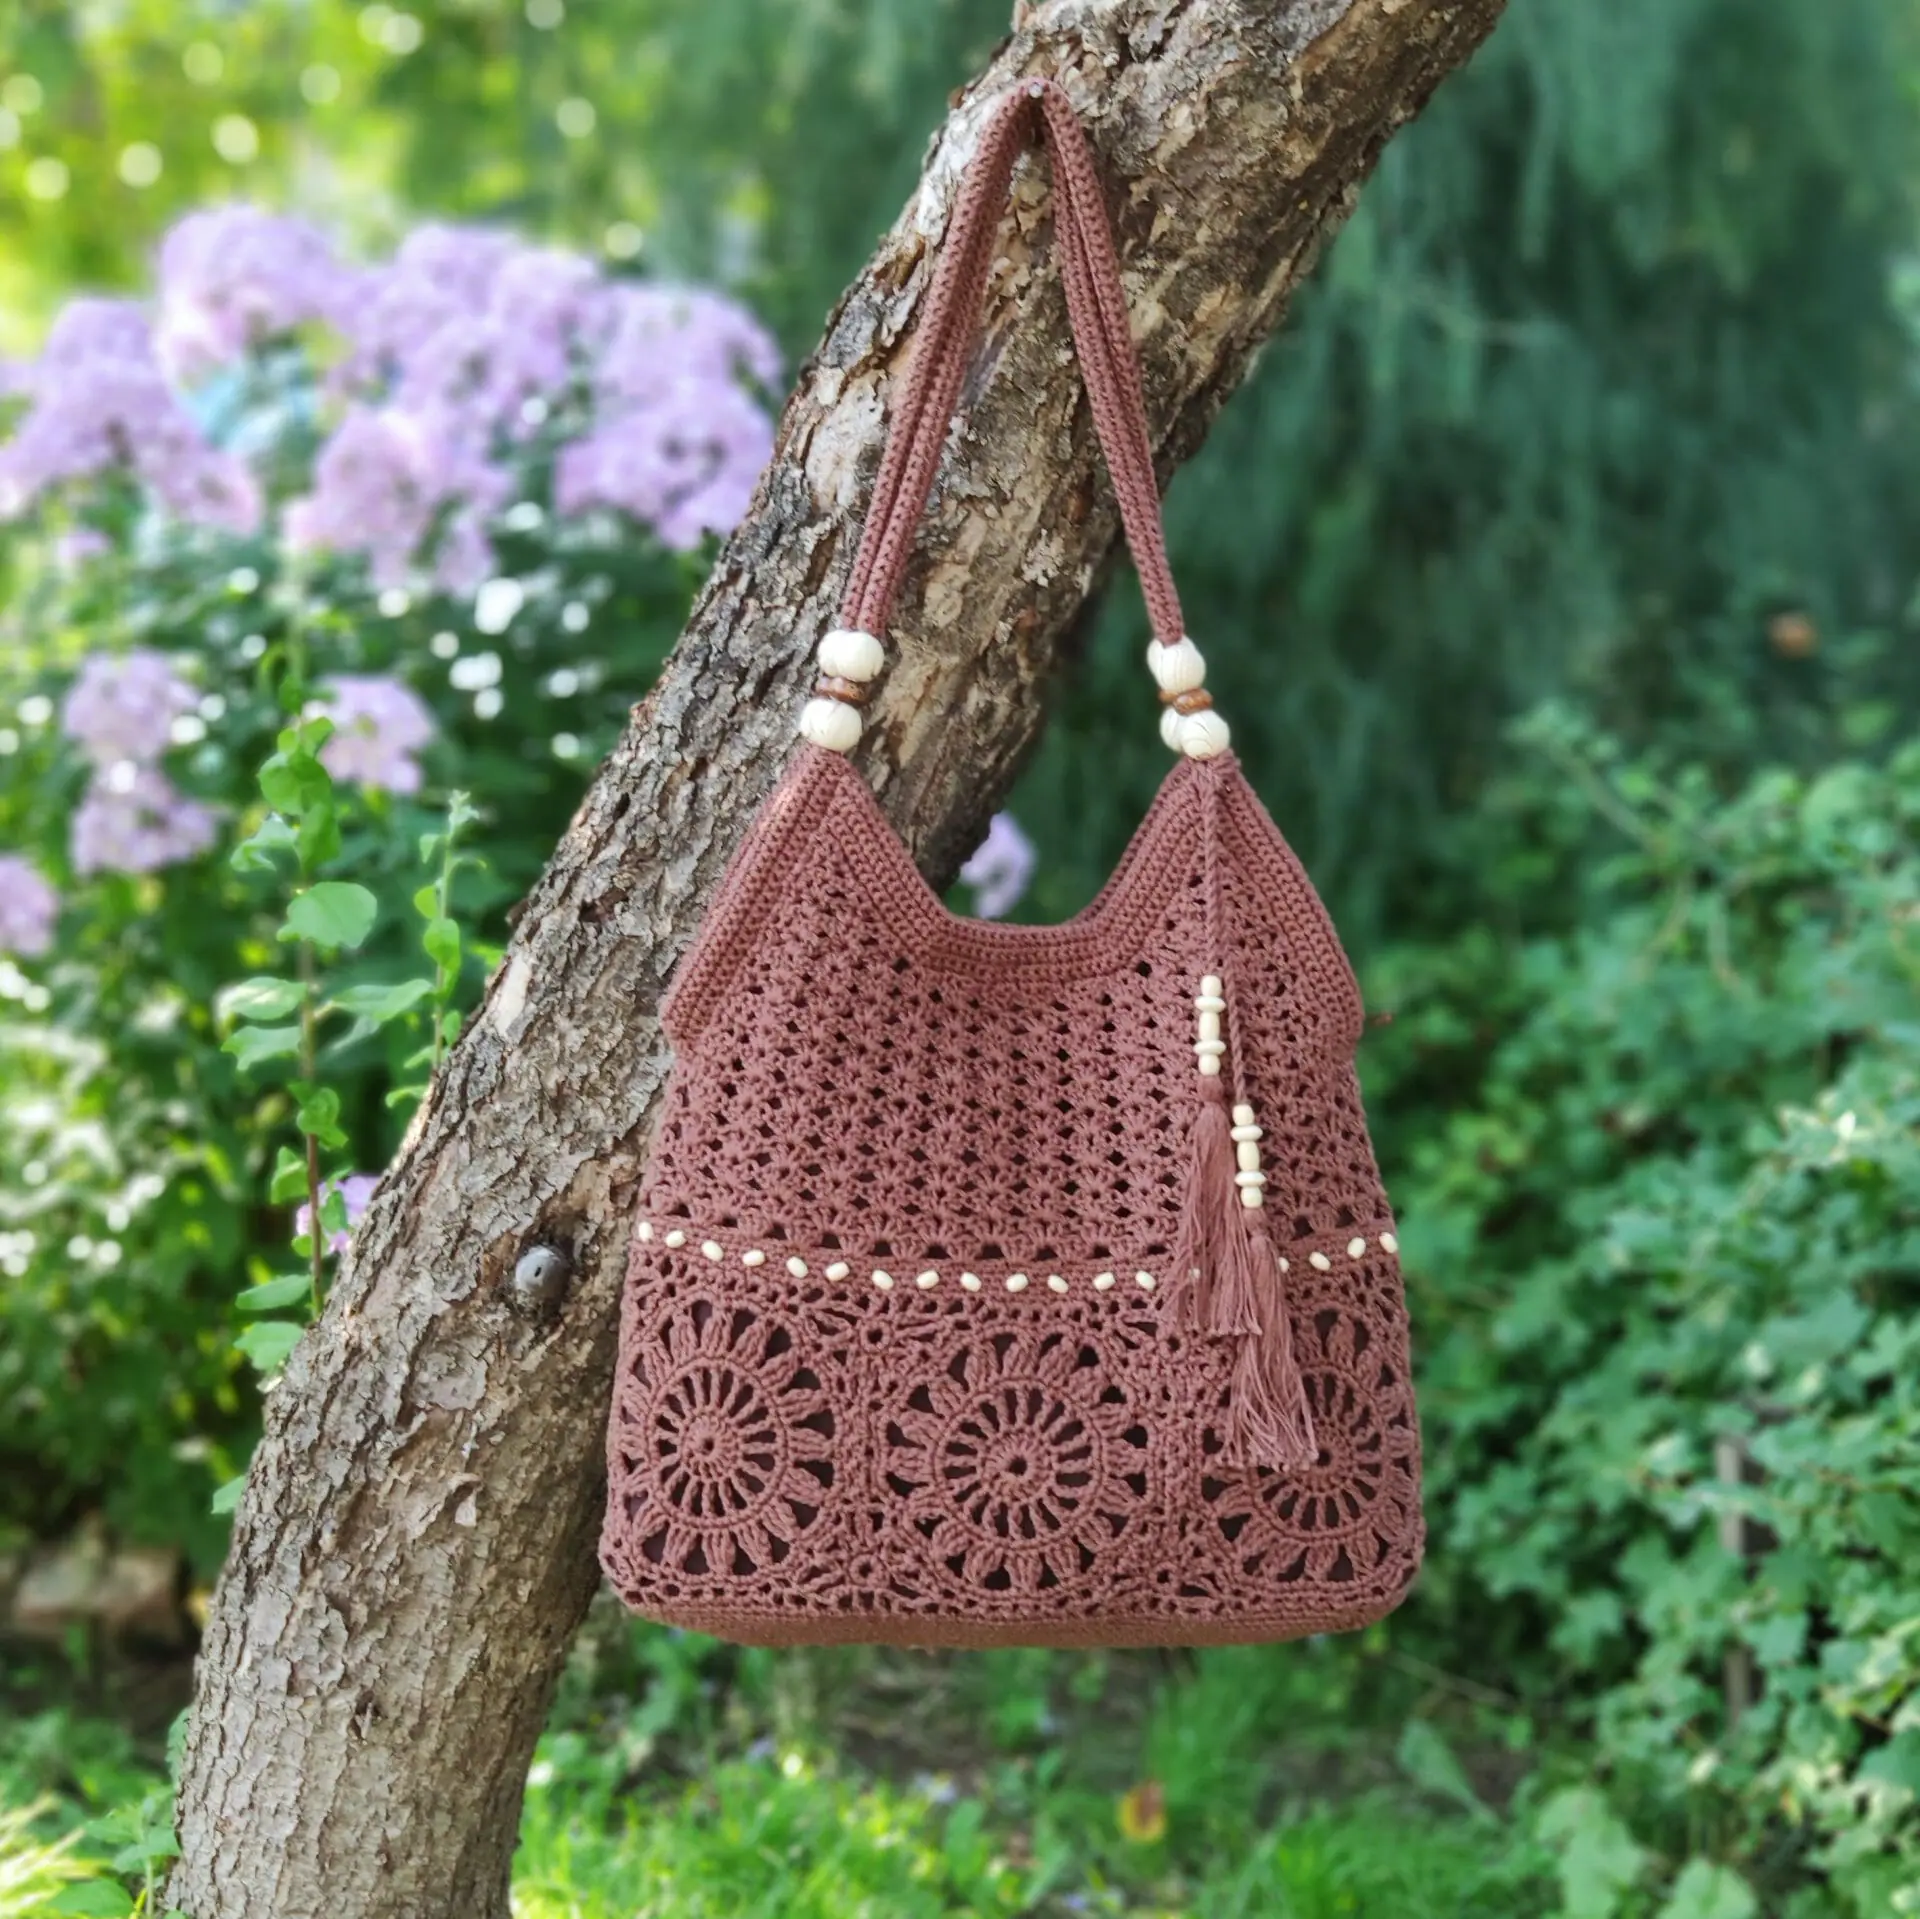 Boho Tote Bag Crochet Pattern - Breckland Tote Bag